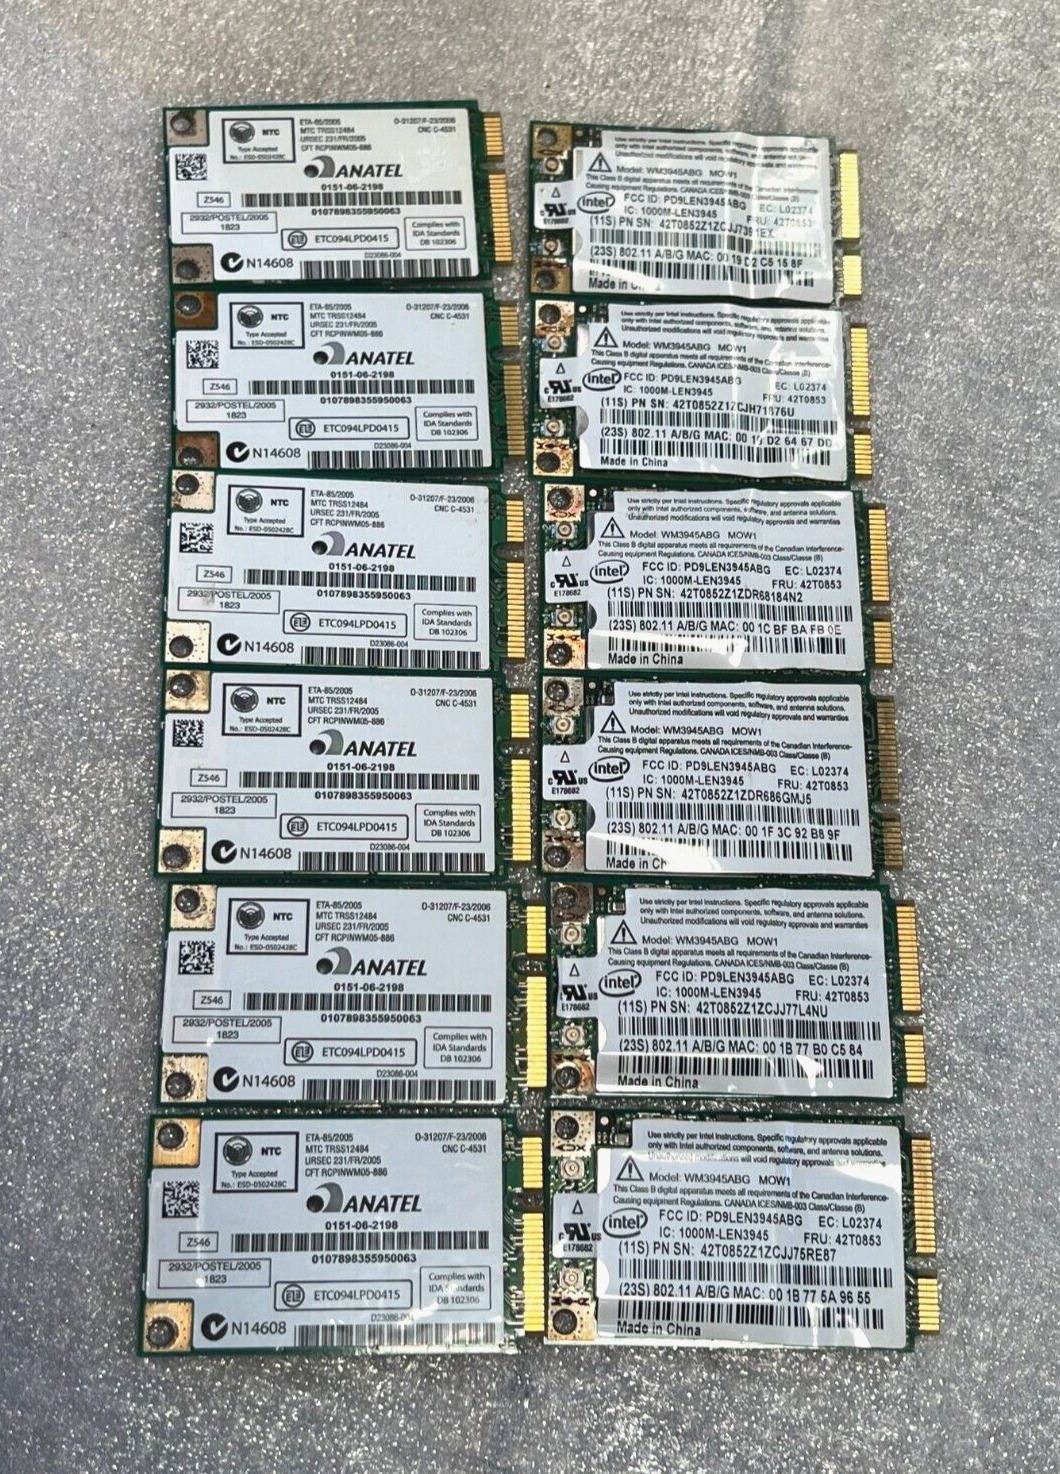 LOT of 12 LENOVO IBM FRU 42T0853 Intel PRO WM3945ABG 802.11a/b/g Mini-PCIE Card